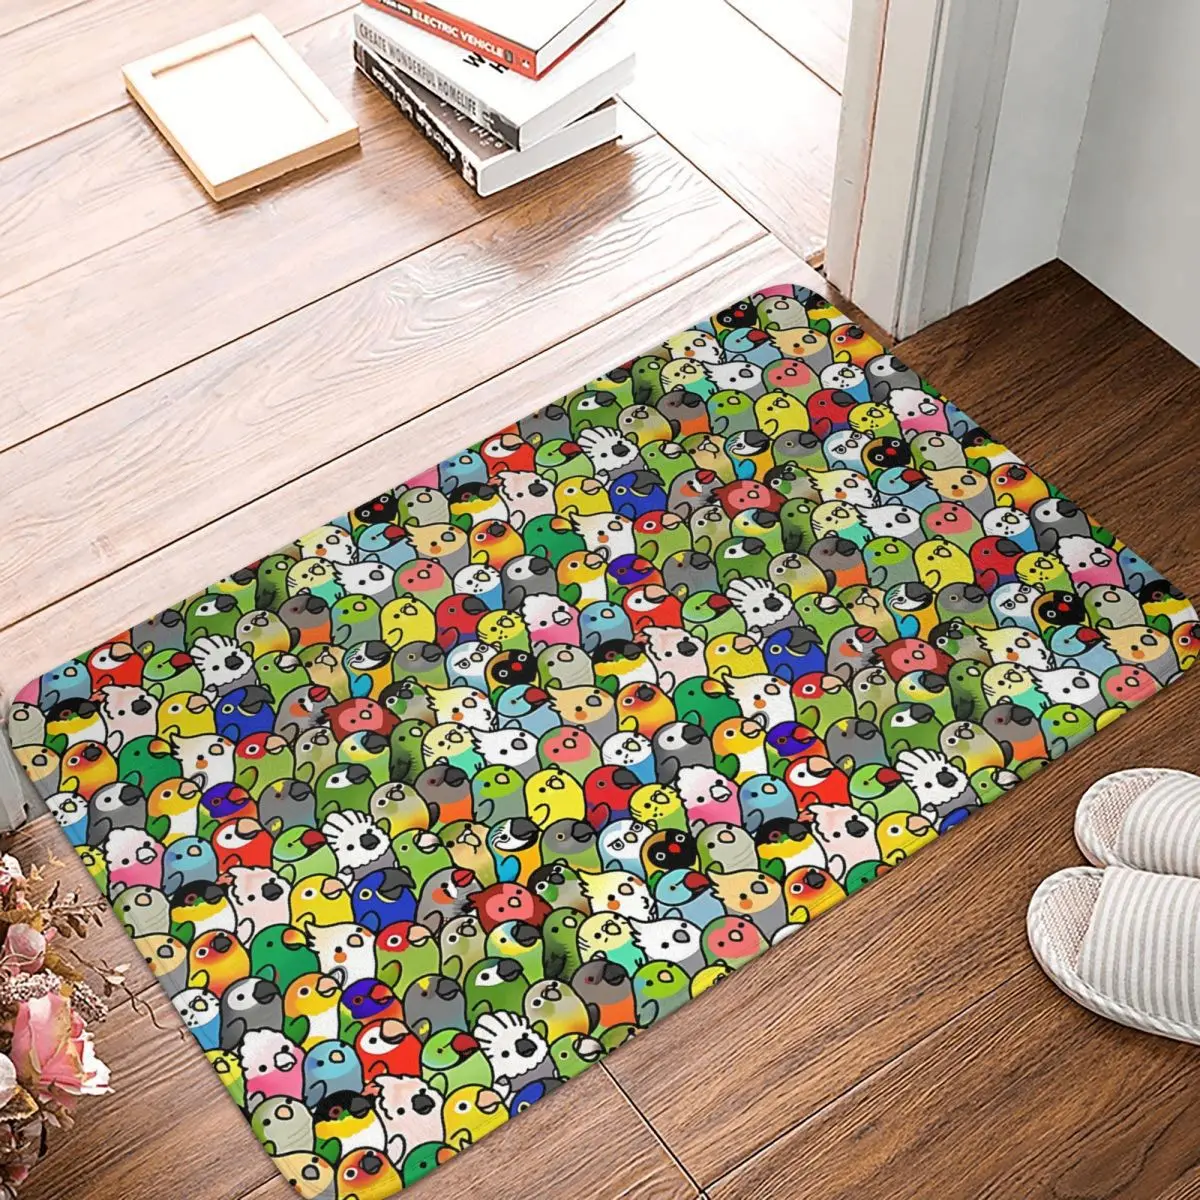 

Kitchen Non-Slip Carpet Everybirdy Pattern Birds Parrots Bedroom Mat Welcome Doormat Home Decoration Rug